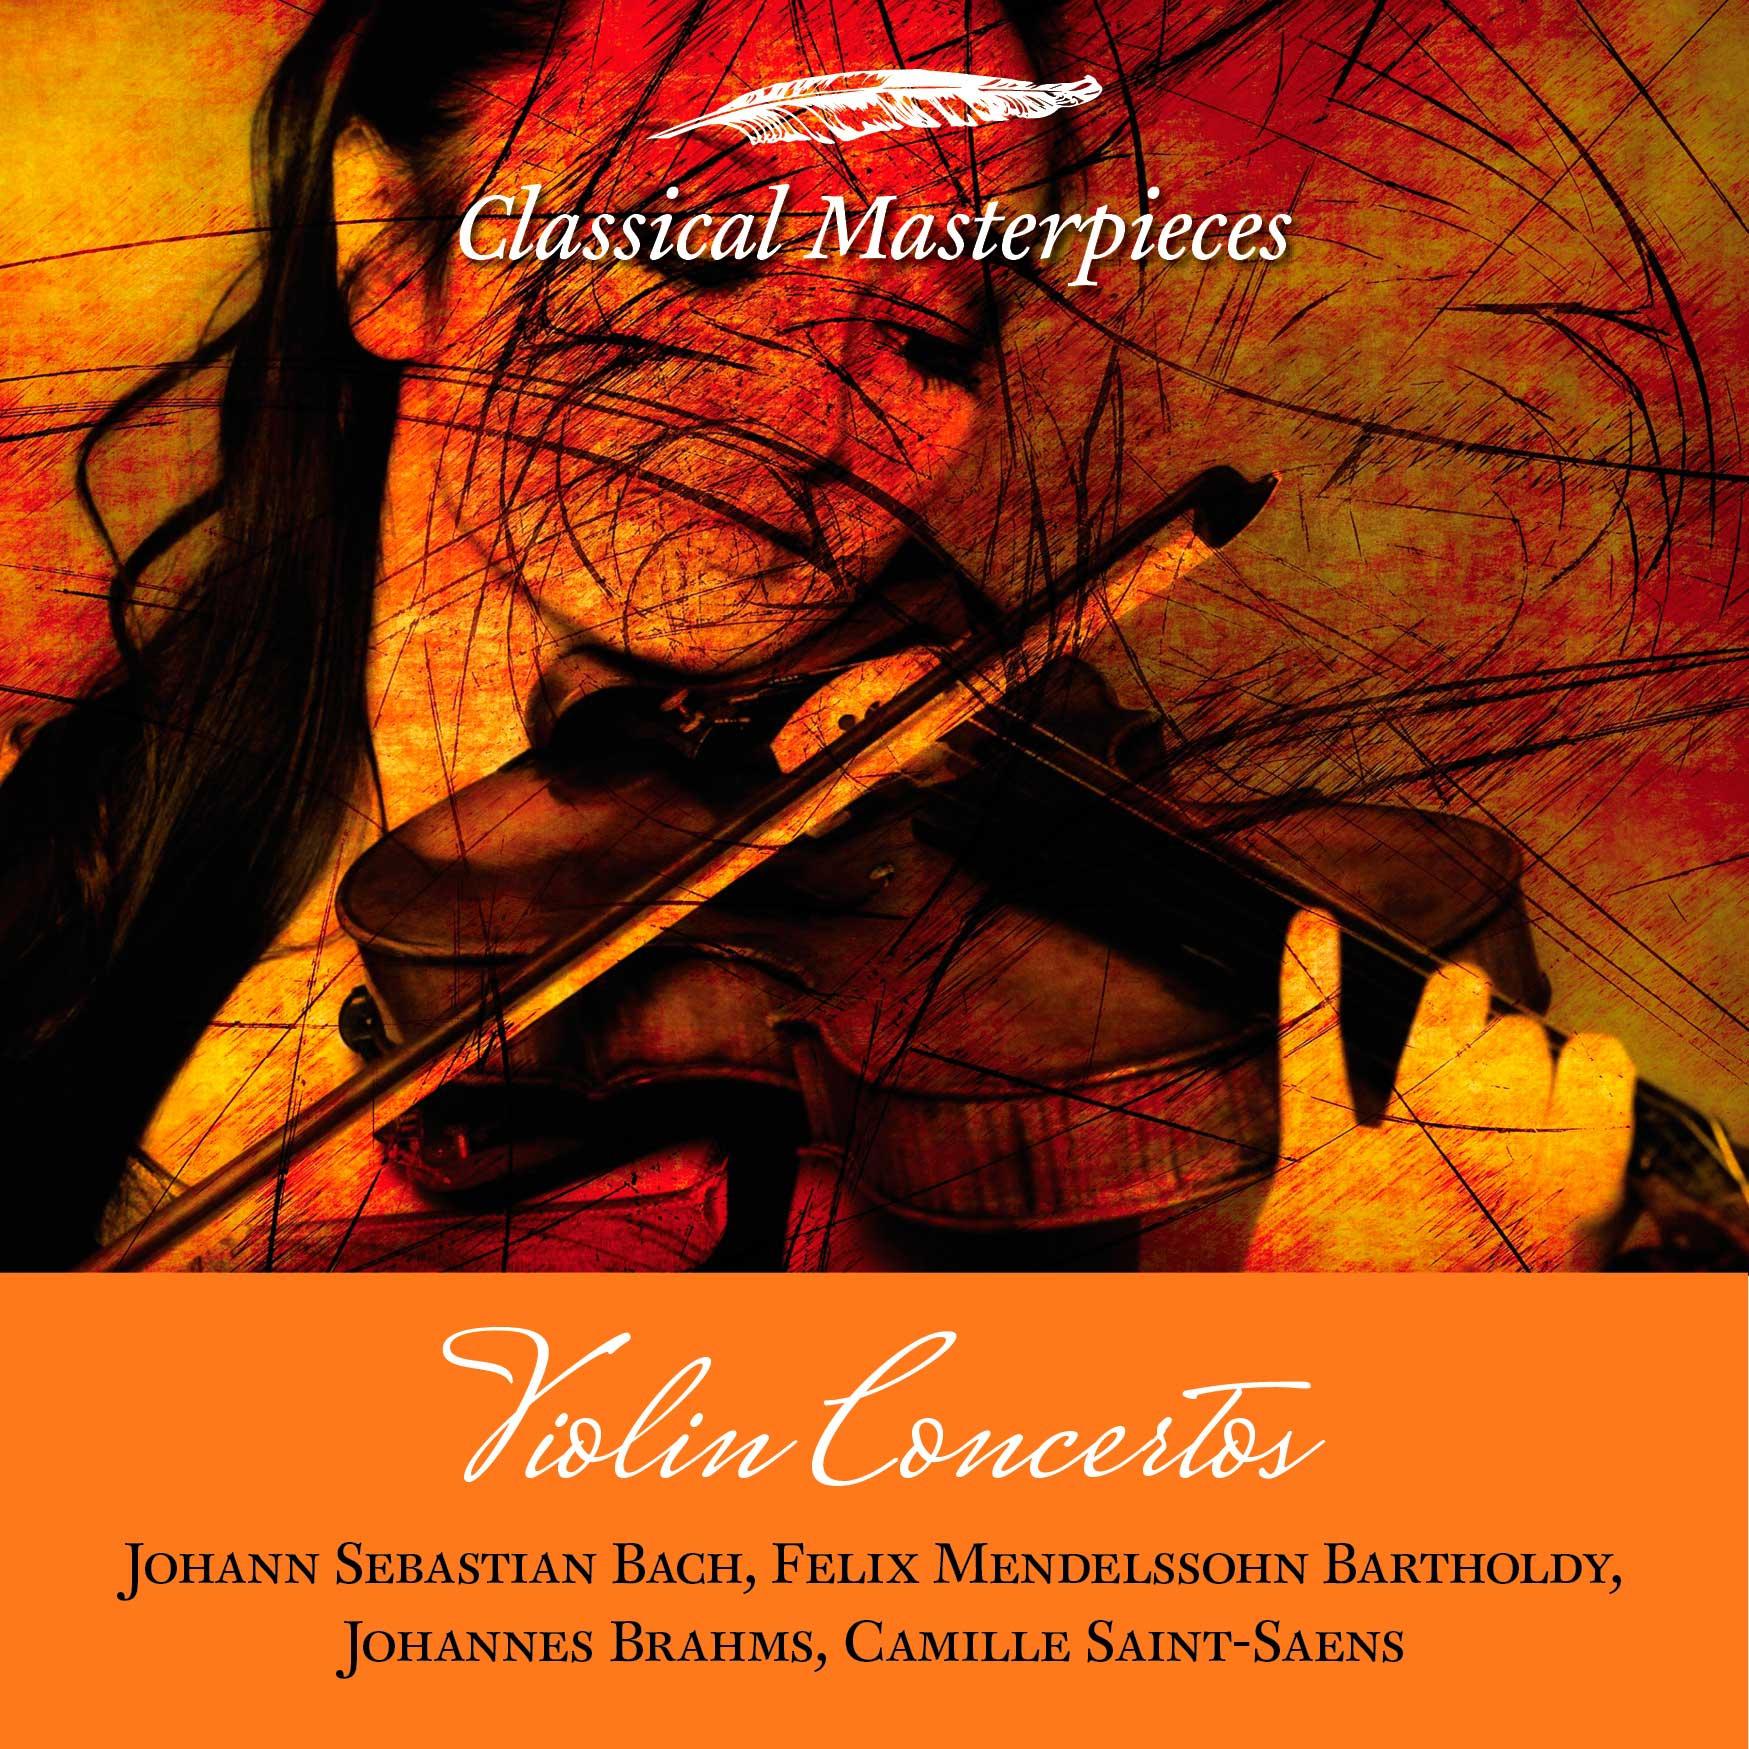 Concerto for Violin & Violoncello in A minor, op. 102:Andante